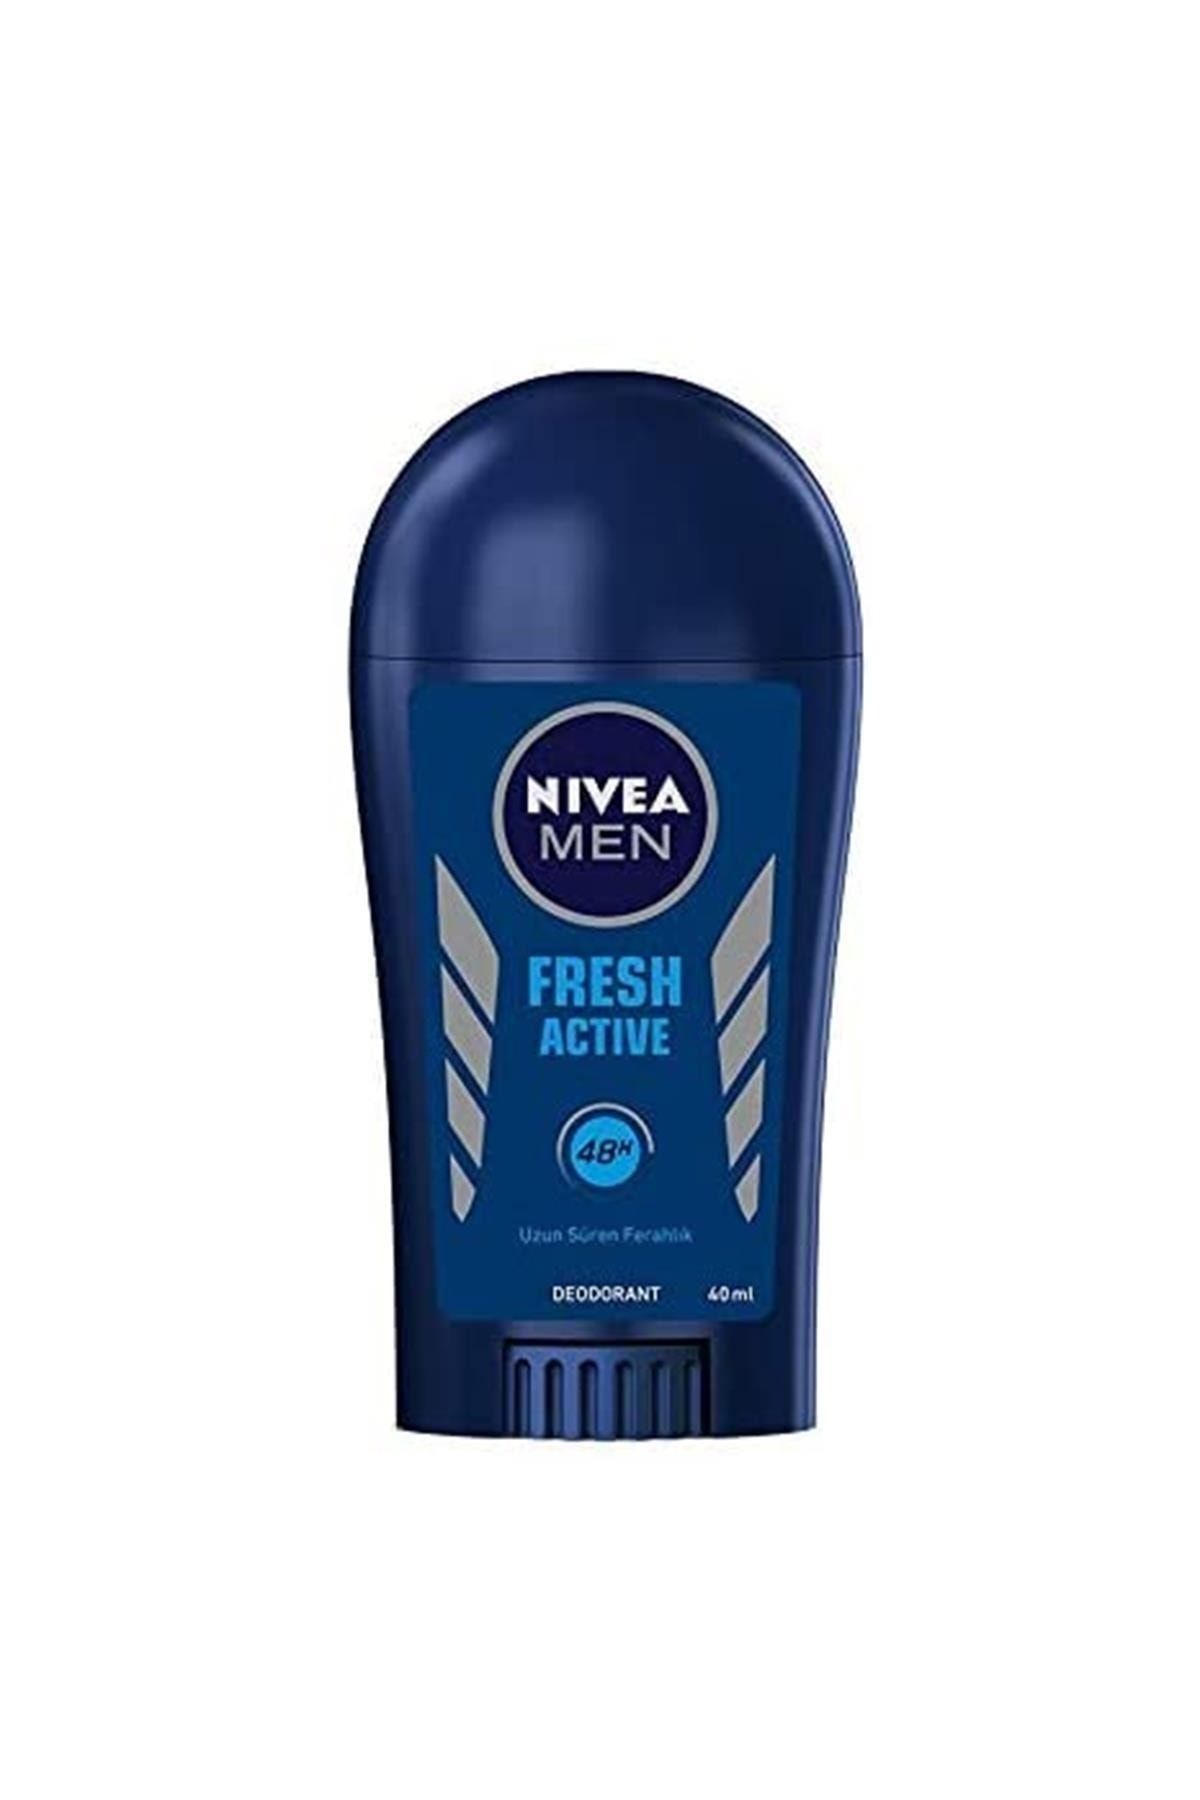 NIVEA Men Erkek Stick Deodorant Fresh Active 48 Saat Deodorant Koruması, 40ml